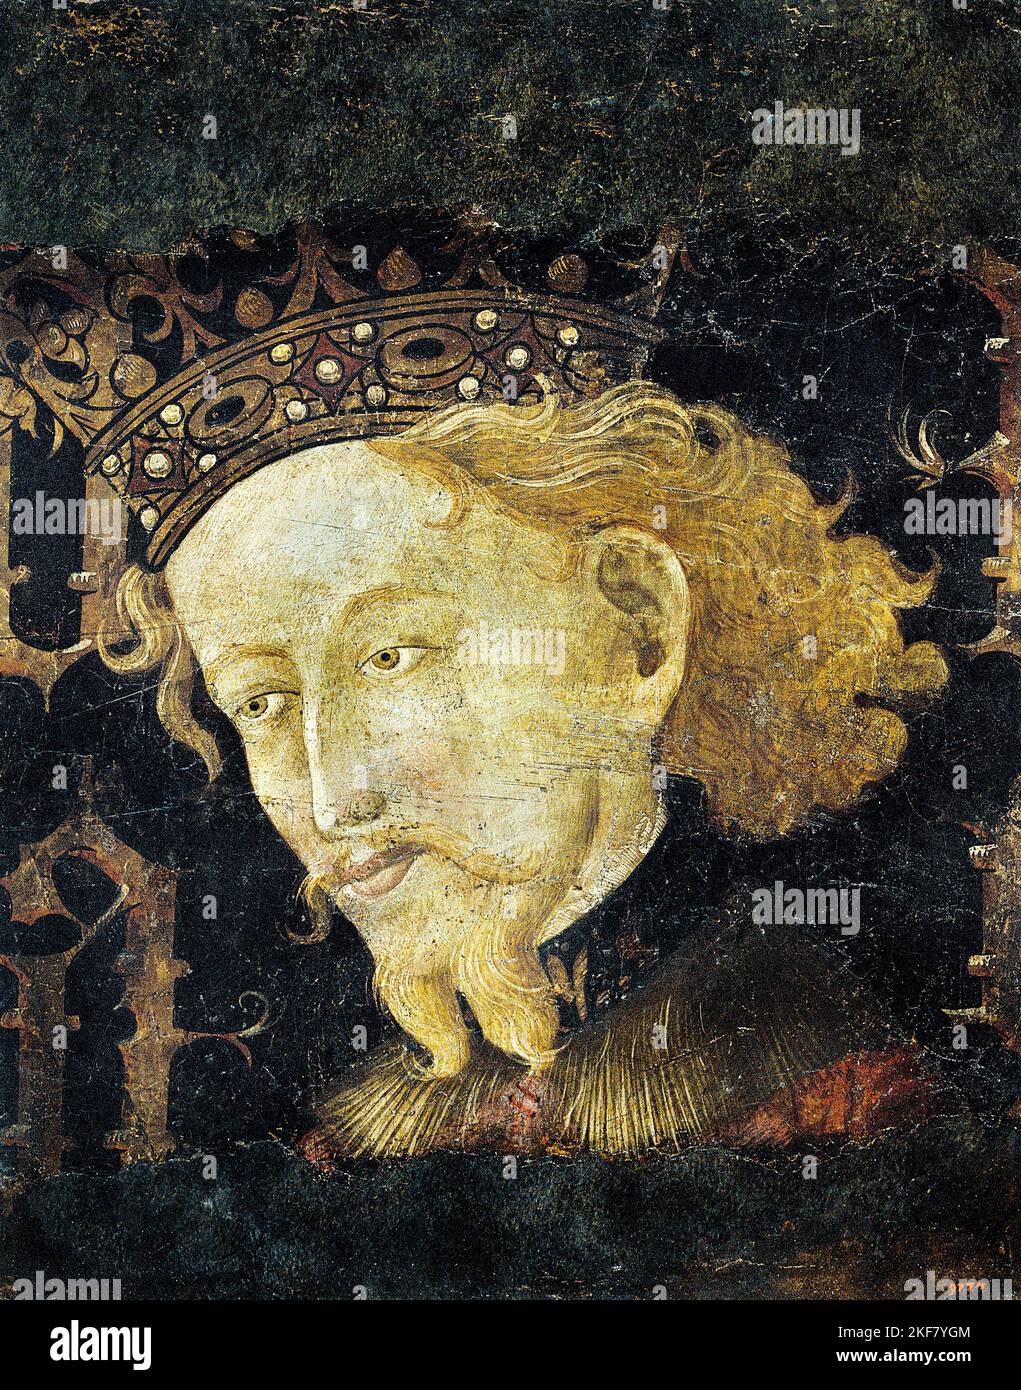 Jaume Mateu; James I the Conqueror; 1427; Tempera on Wood; Museu Nacional d'Art de Catalunya, Barcelona, Spain. Stock Photo